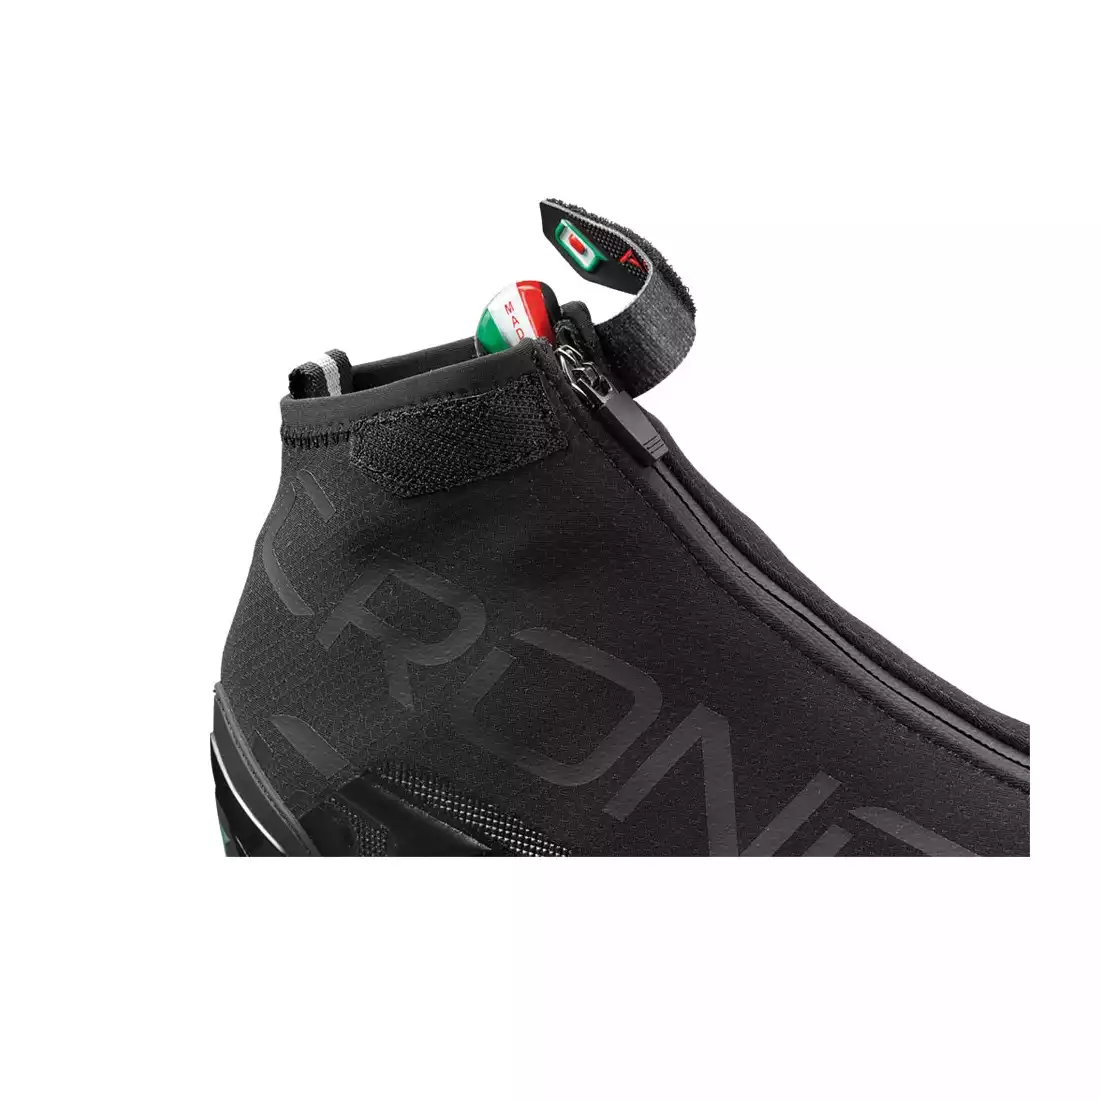 CRONO ARTICA MTB - zimowe buty rowerowe MTB - ZAMEK- kolor: Czarny